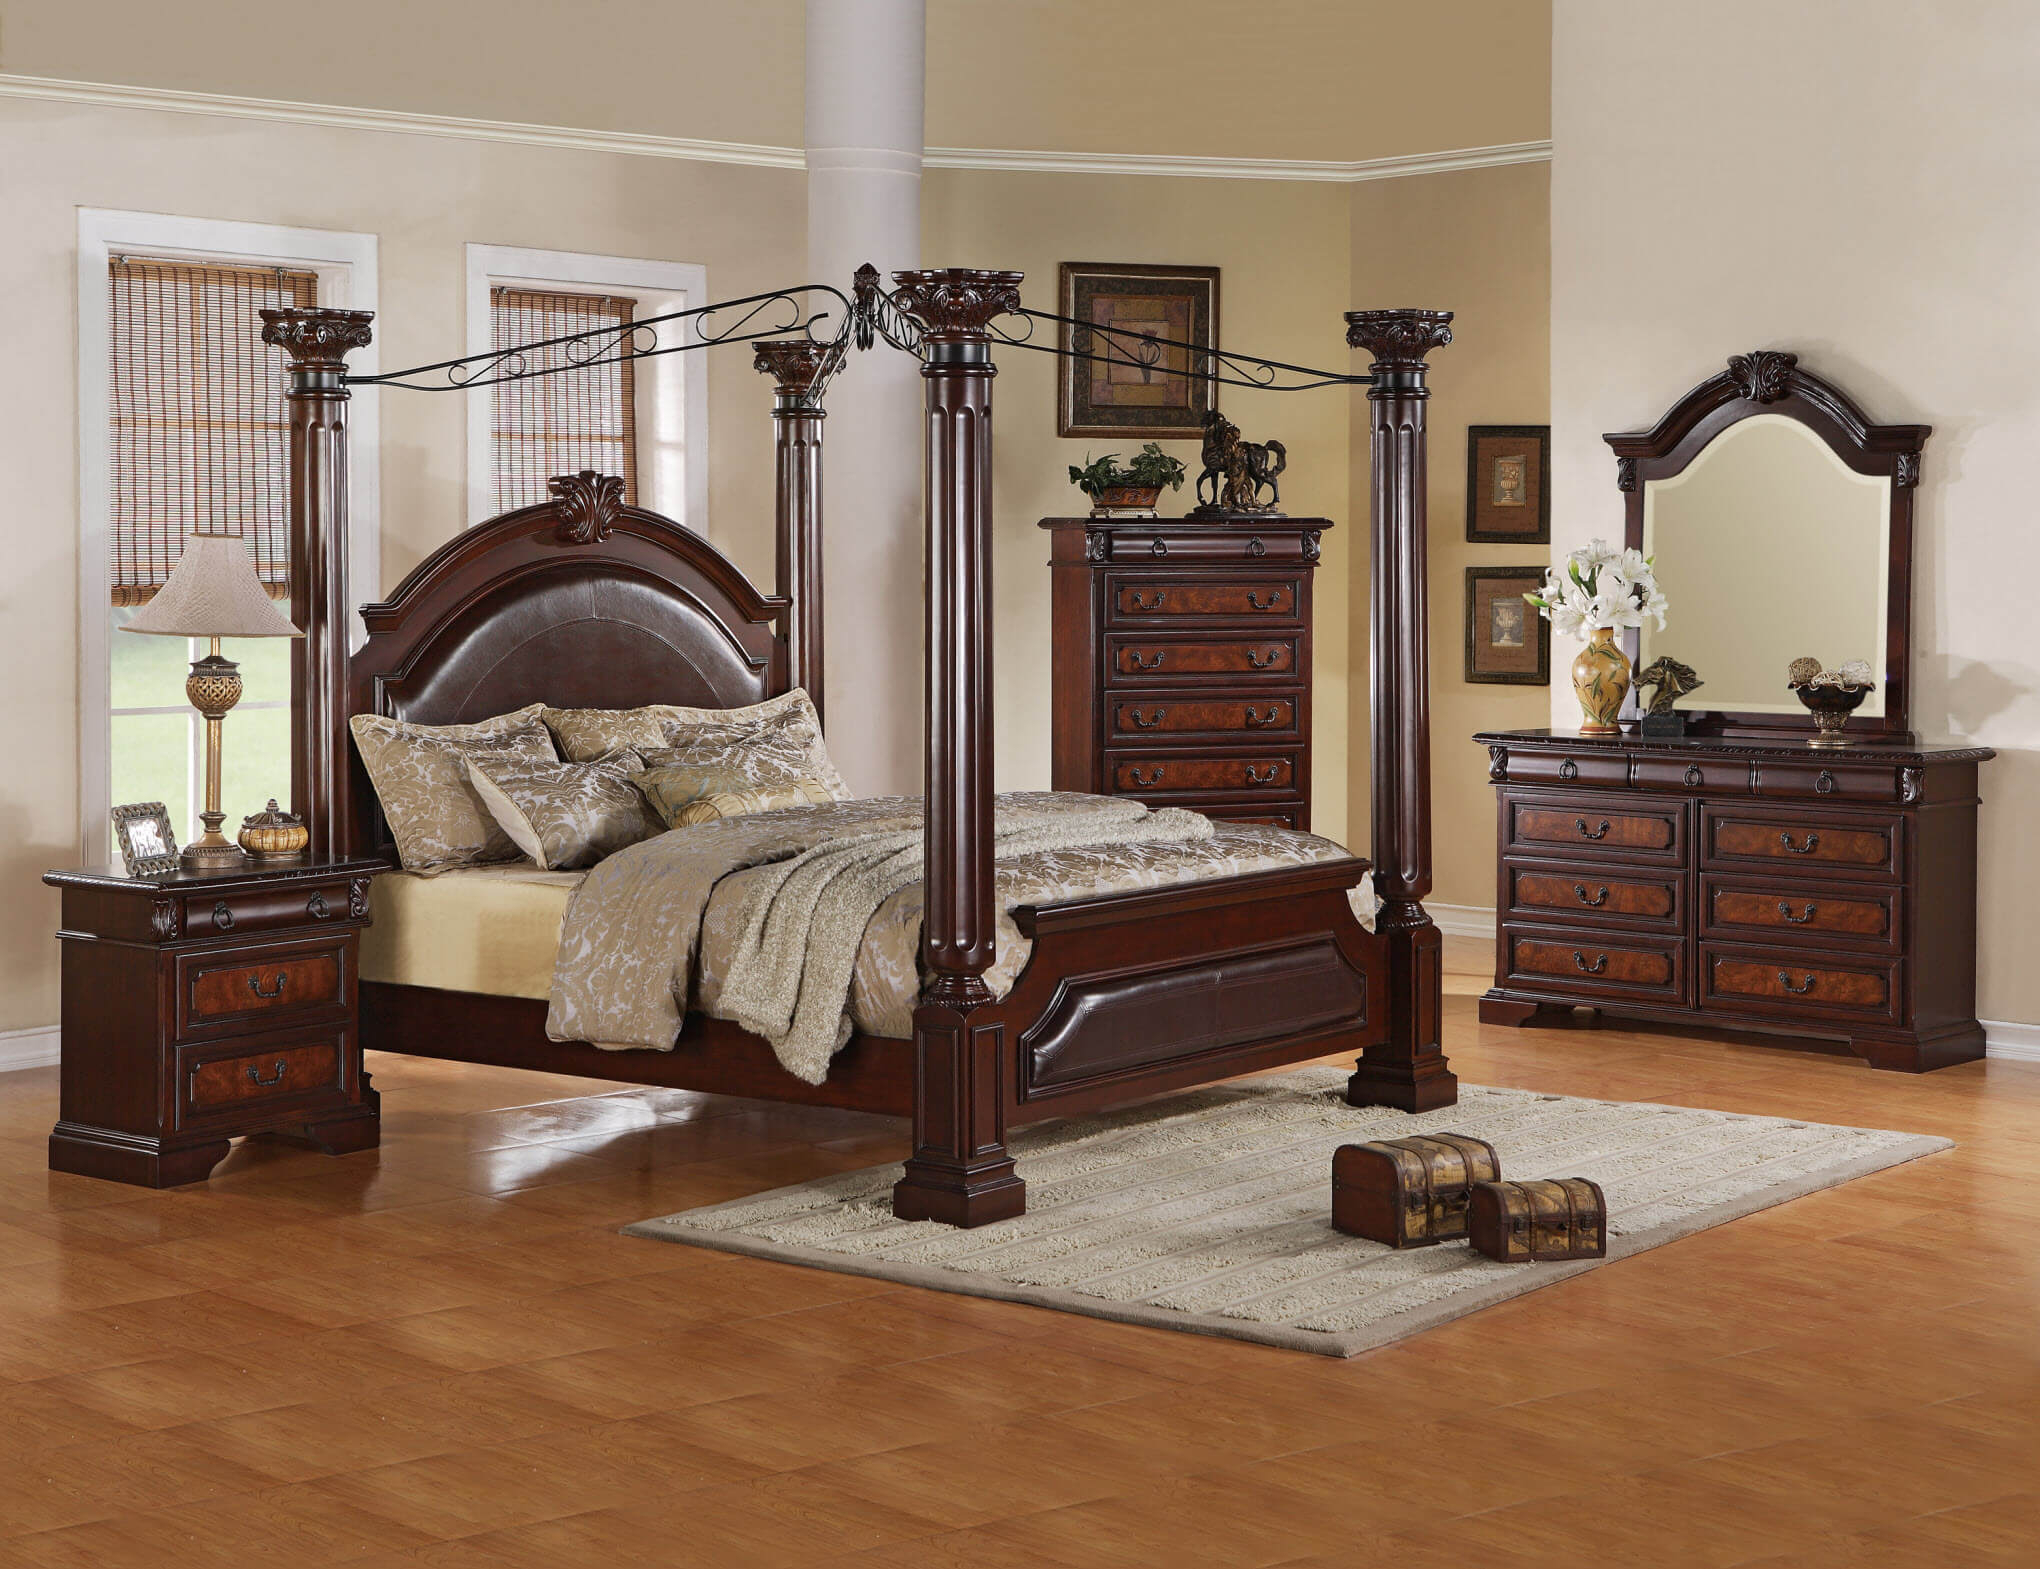 renaissance revival bedroom furniture